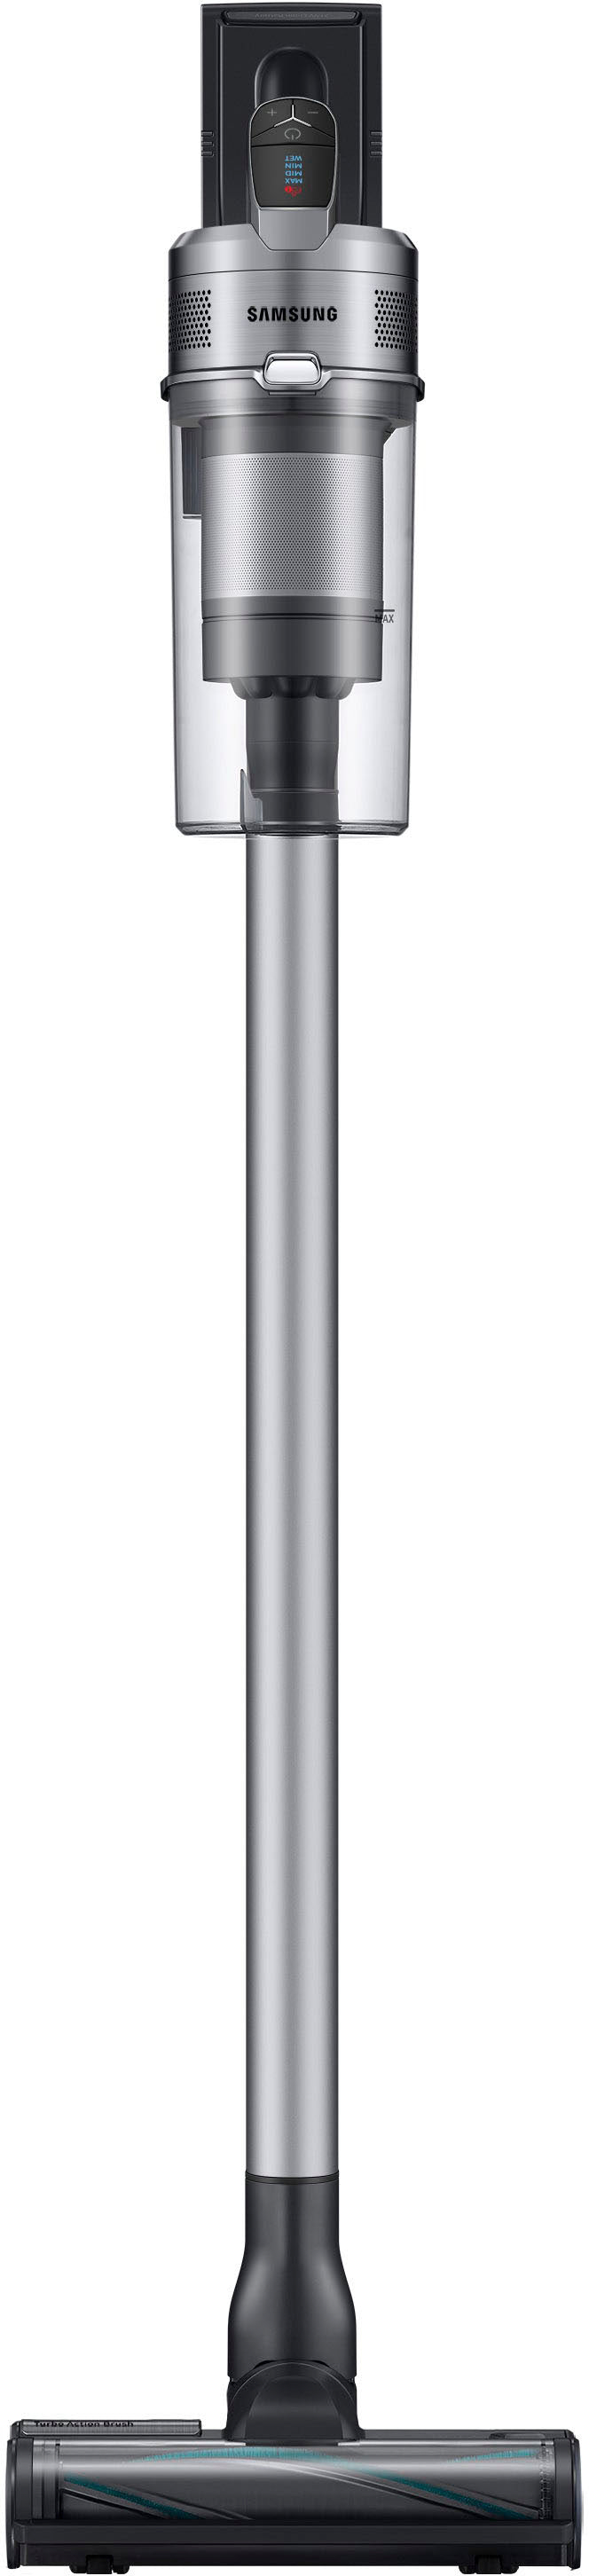 Samsung - Jet 75 Cordless Stick Vacuum - Titan ChroMetal_5